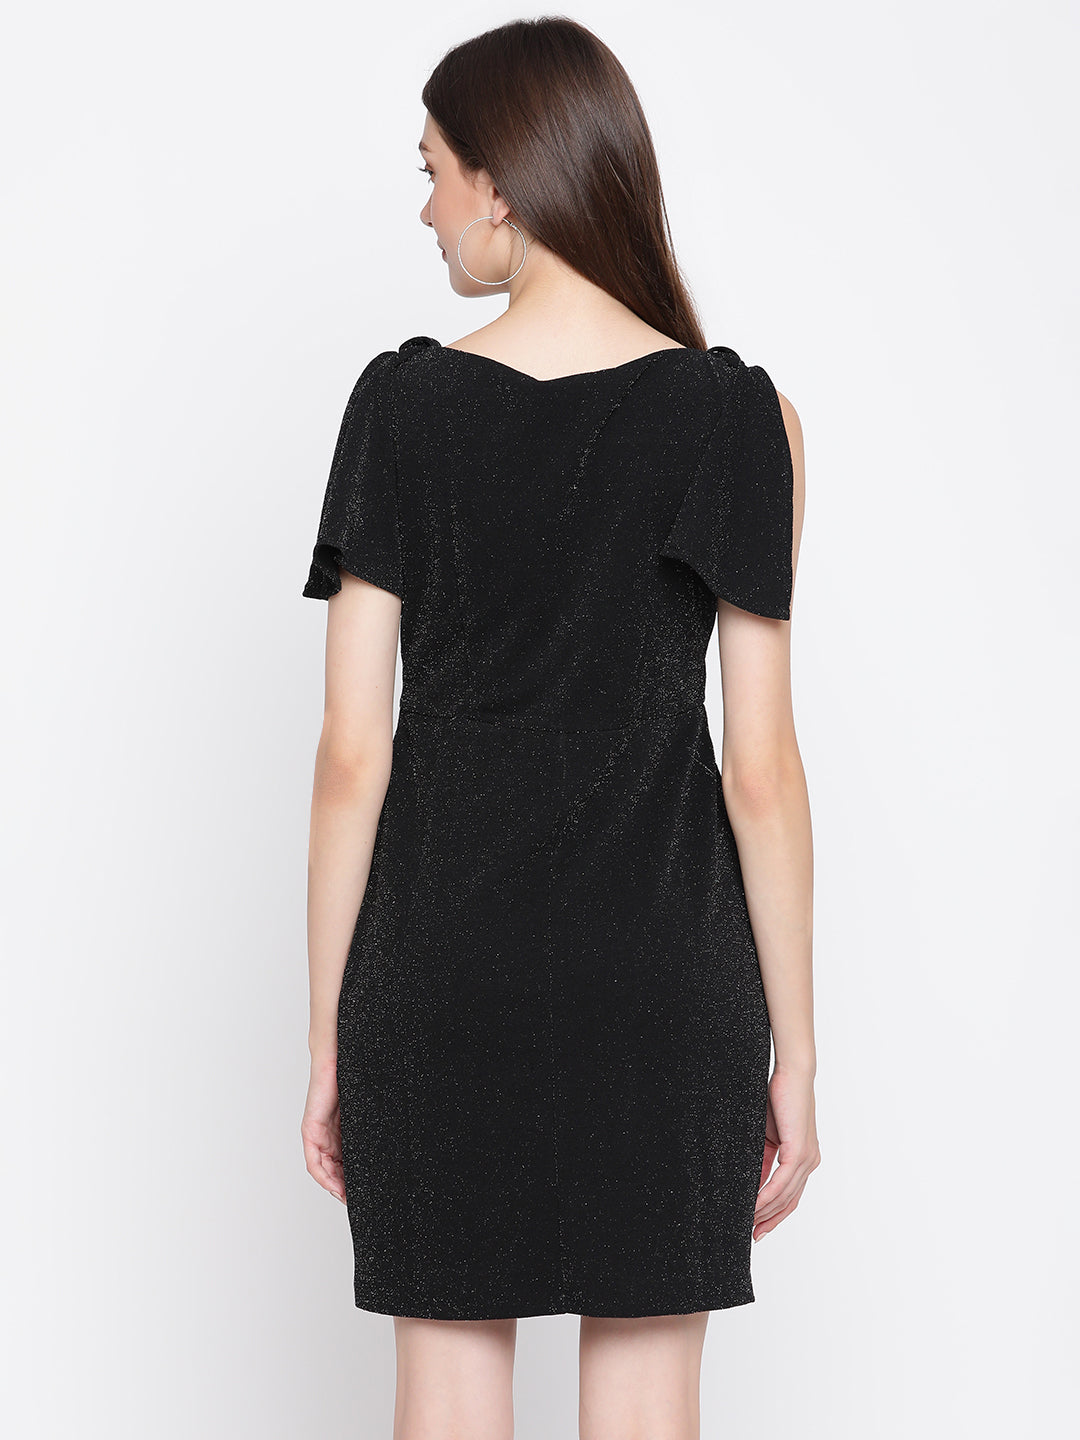 Black Half Sleeve A-Line Dress